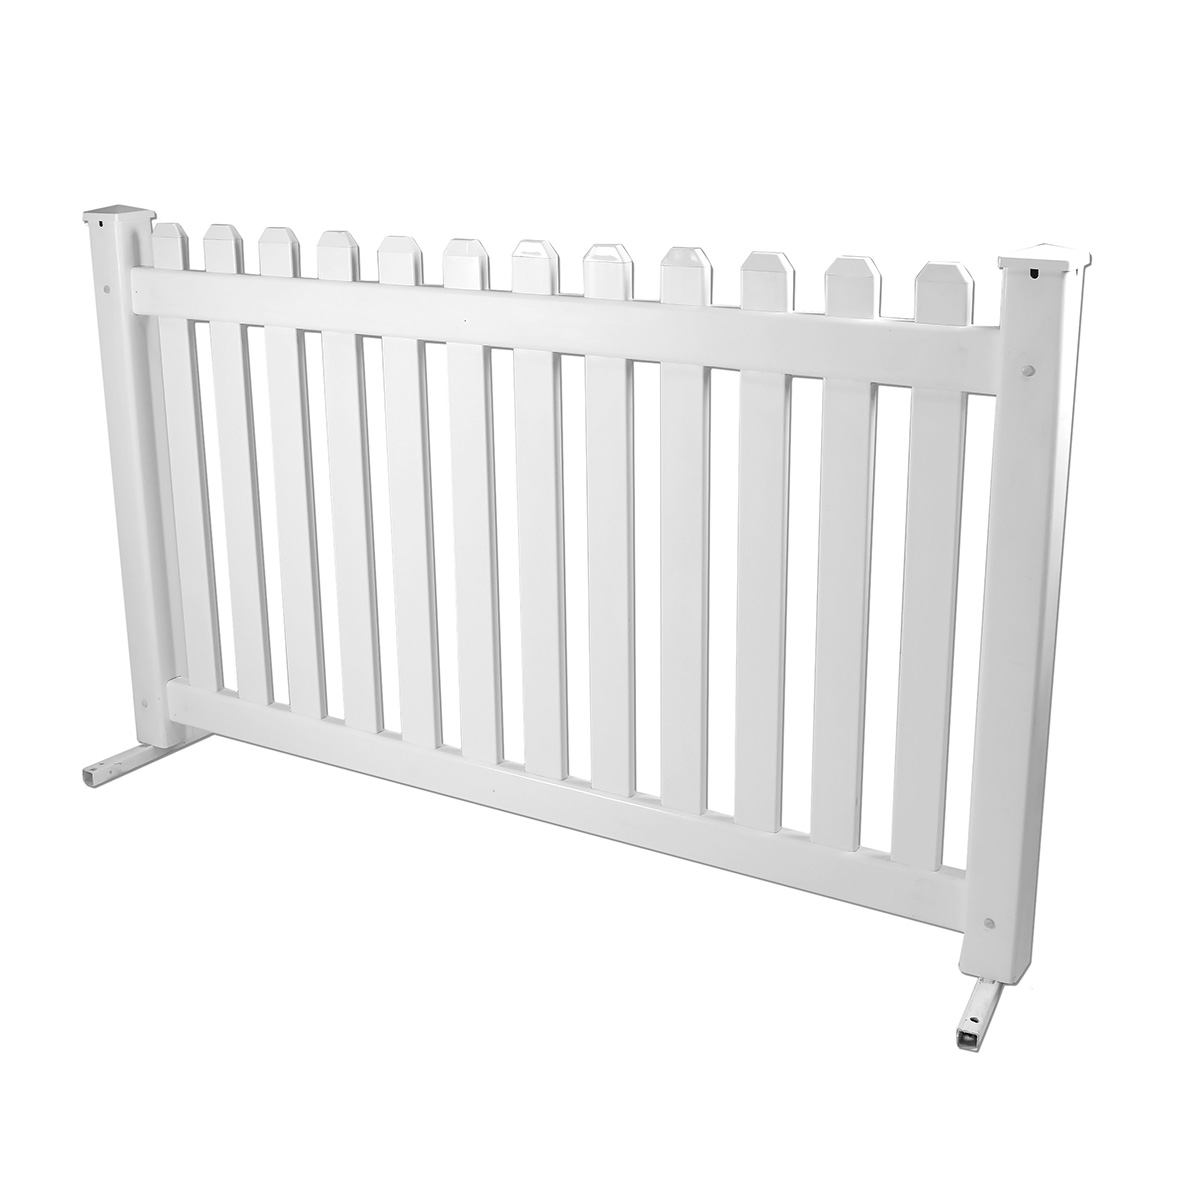 6' White Picket Fence 